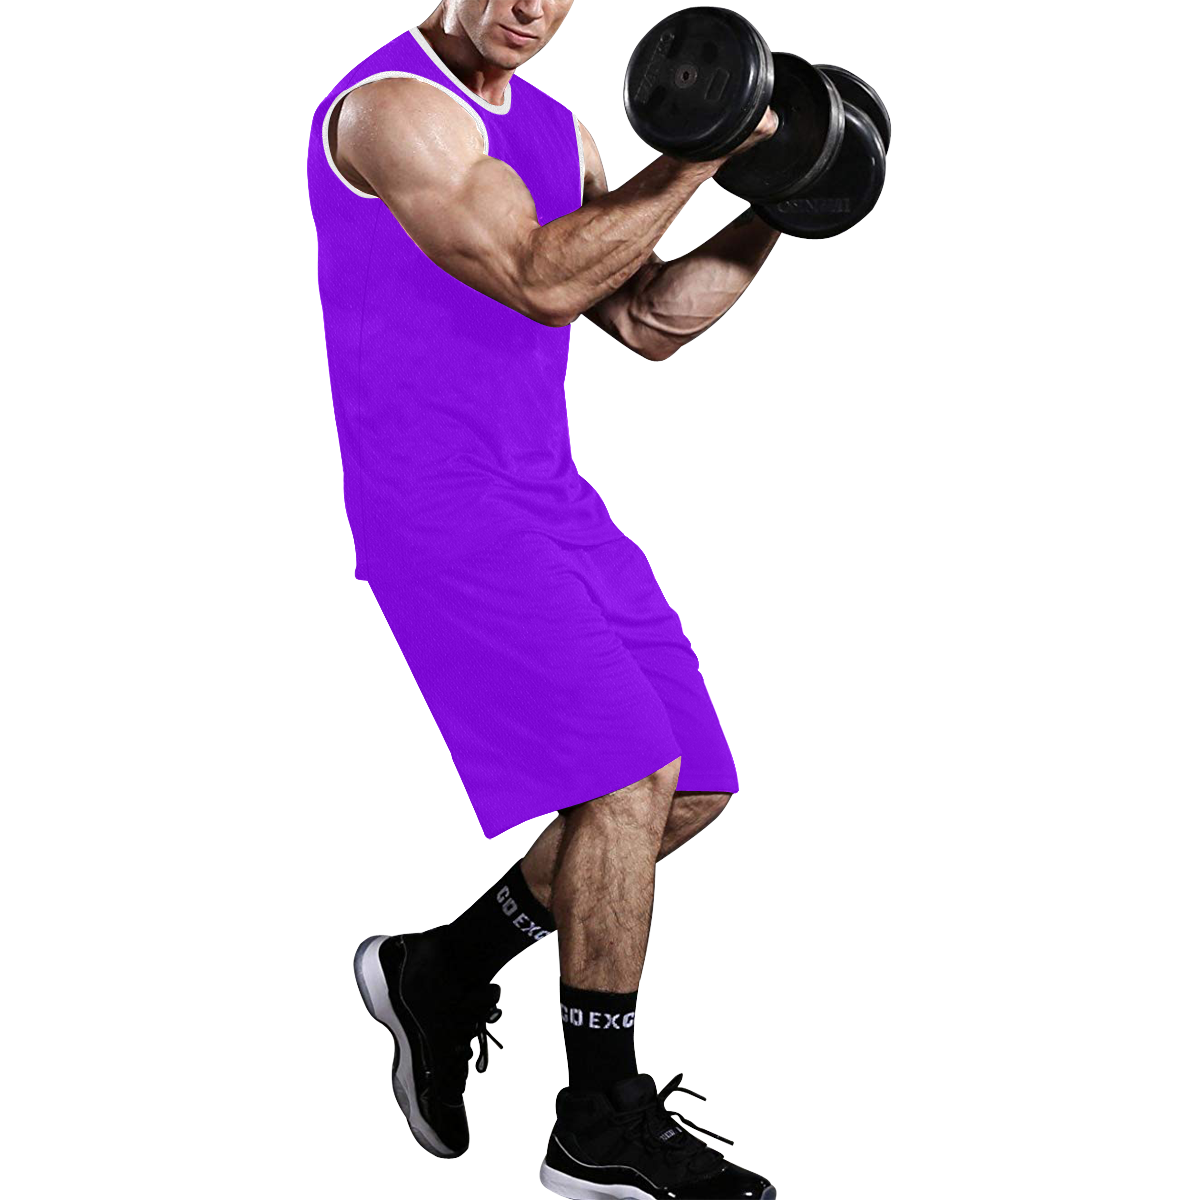 color electric violet All Over Print Basketball Uniform